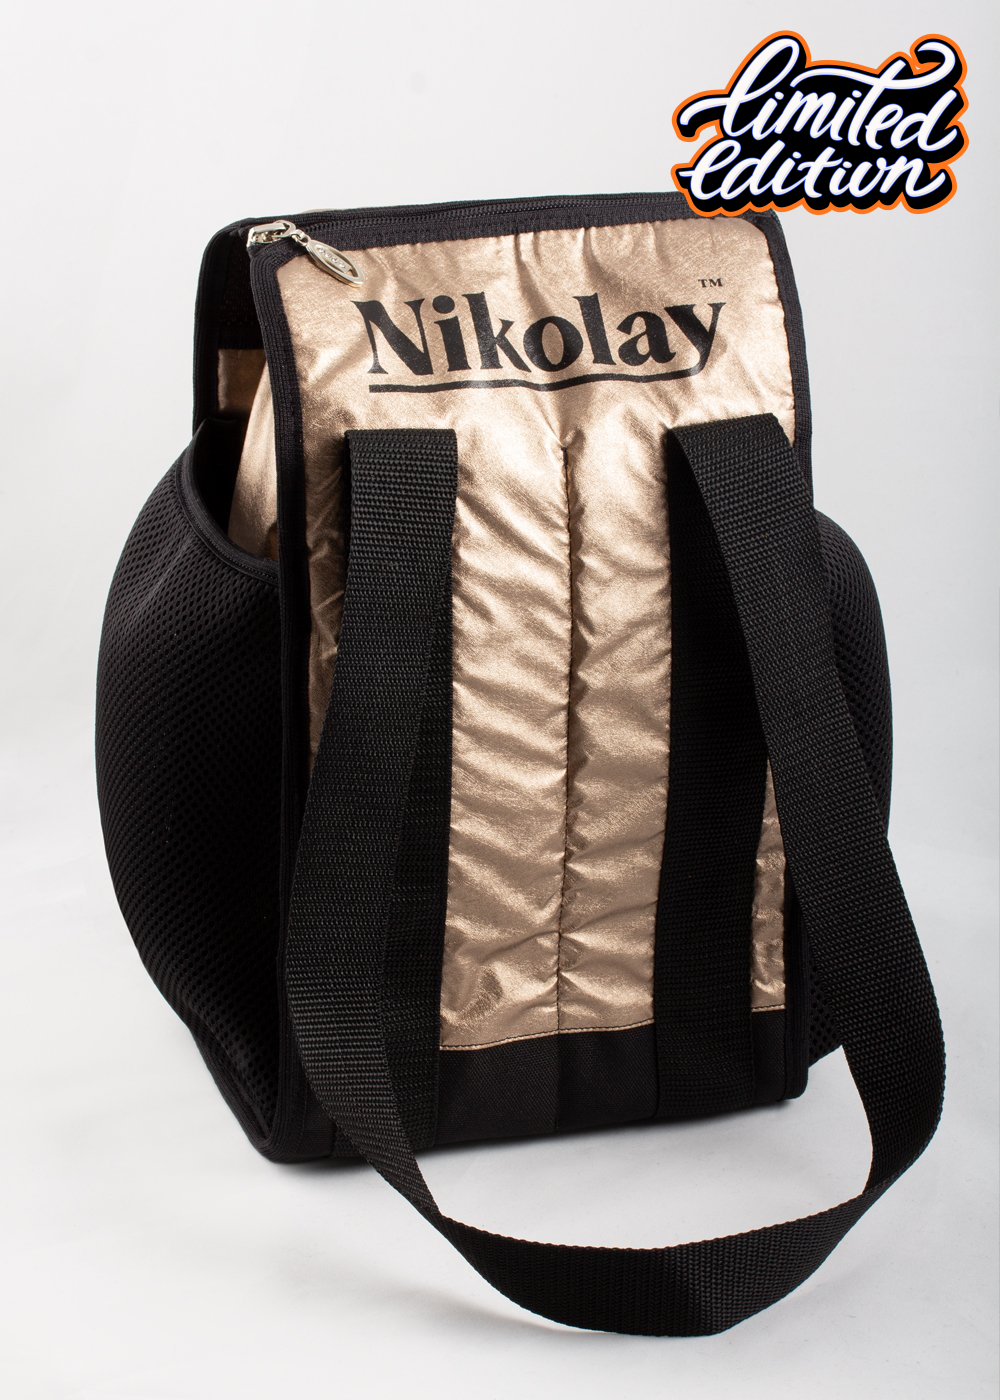 Nikolay 4 Slot Pointe Shoe Bag w/ 1 Zip Pocket